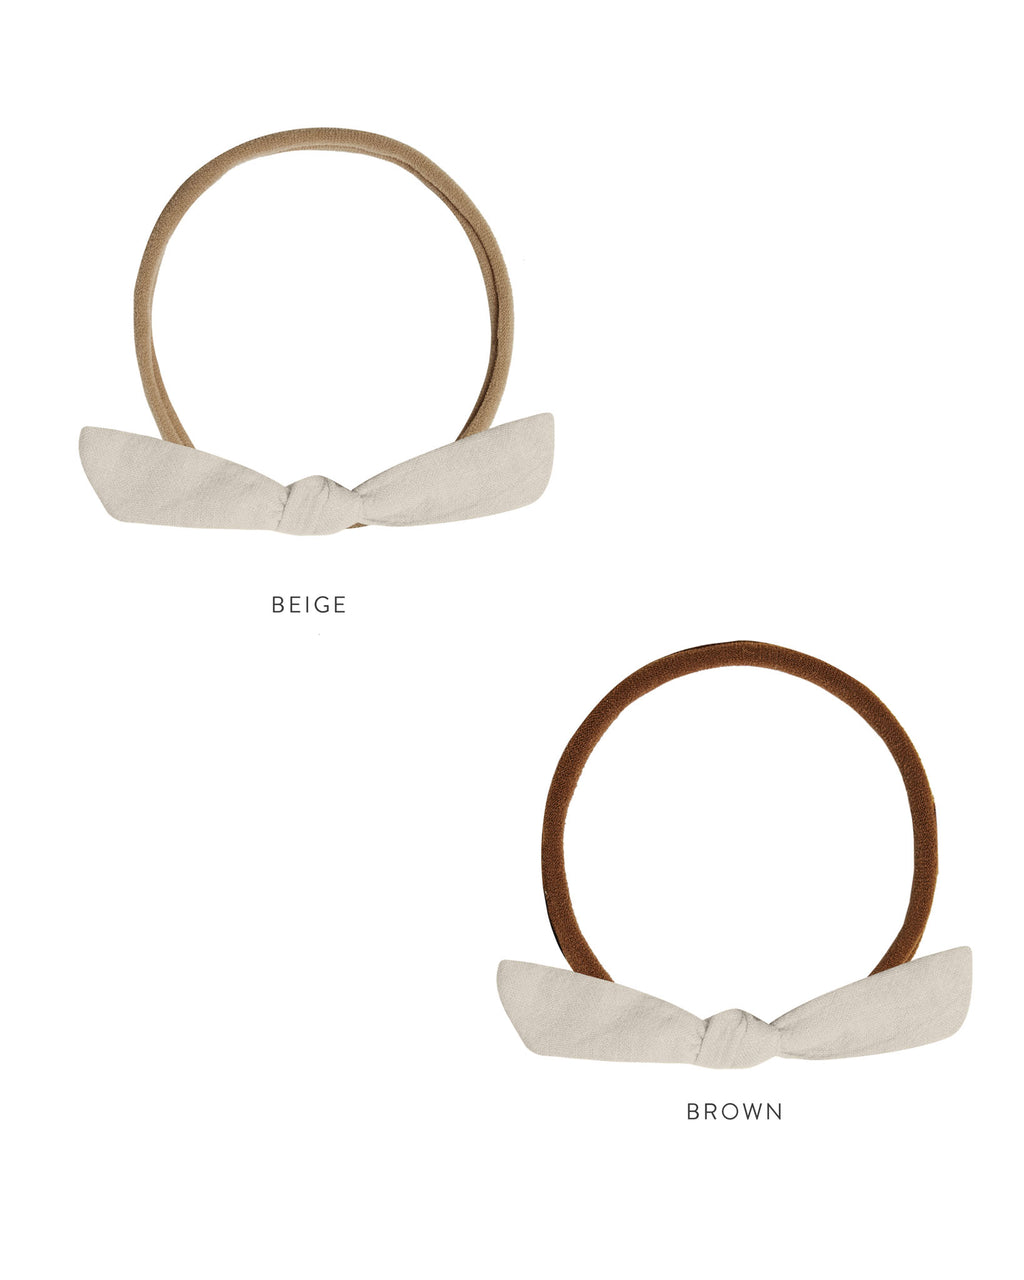 Rylee + Cru Knot Headband - Natural